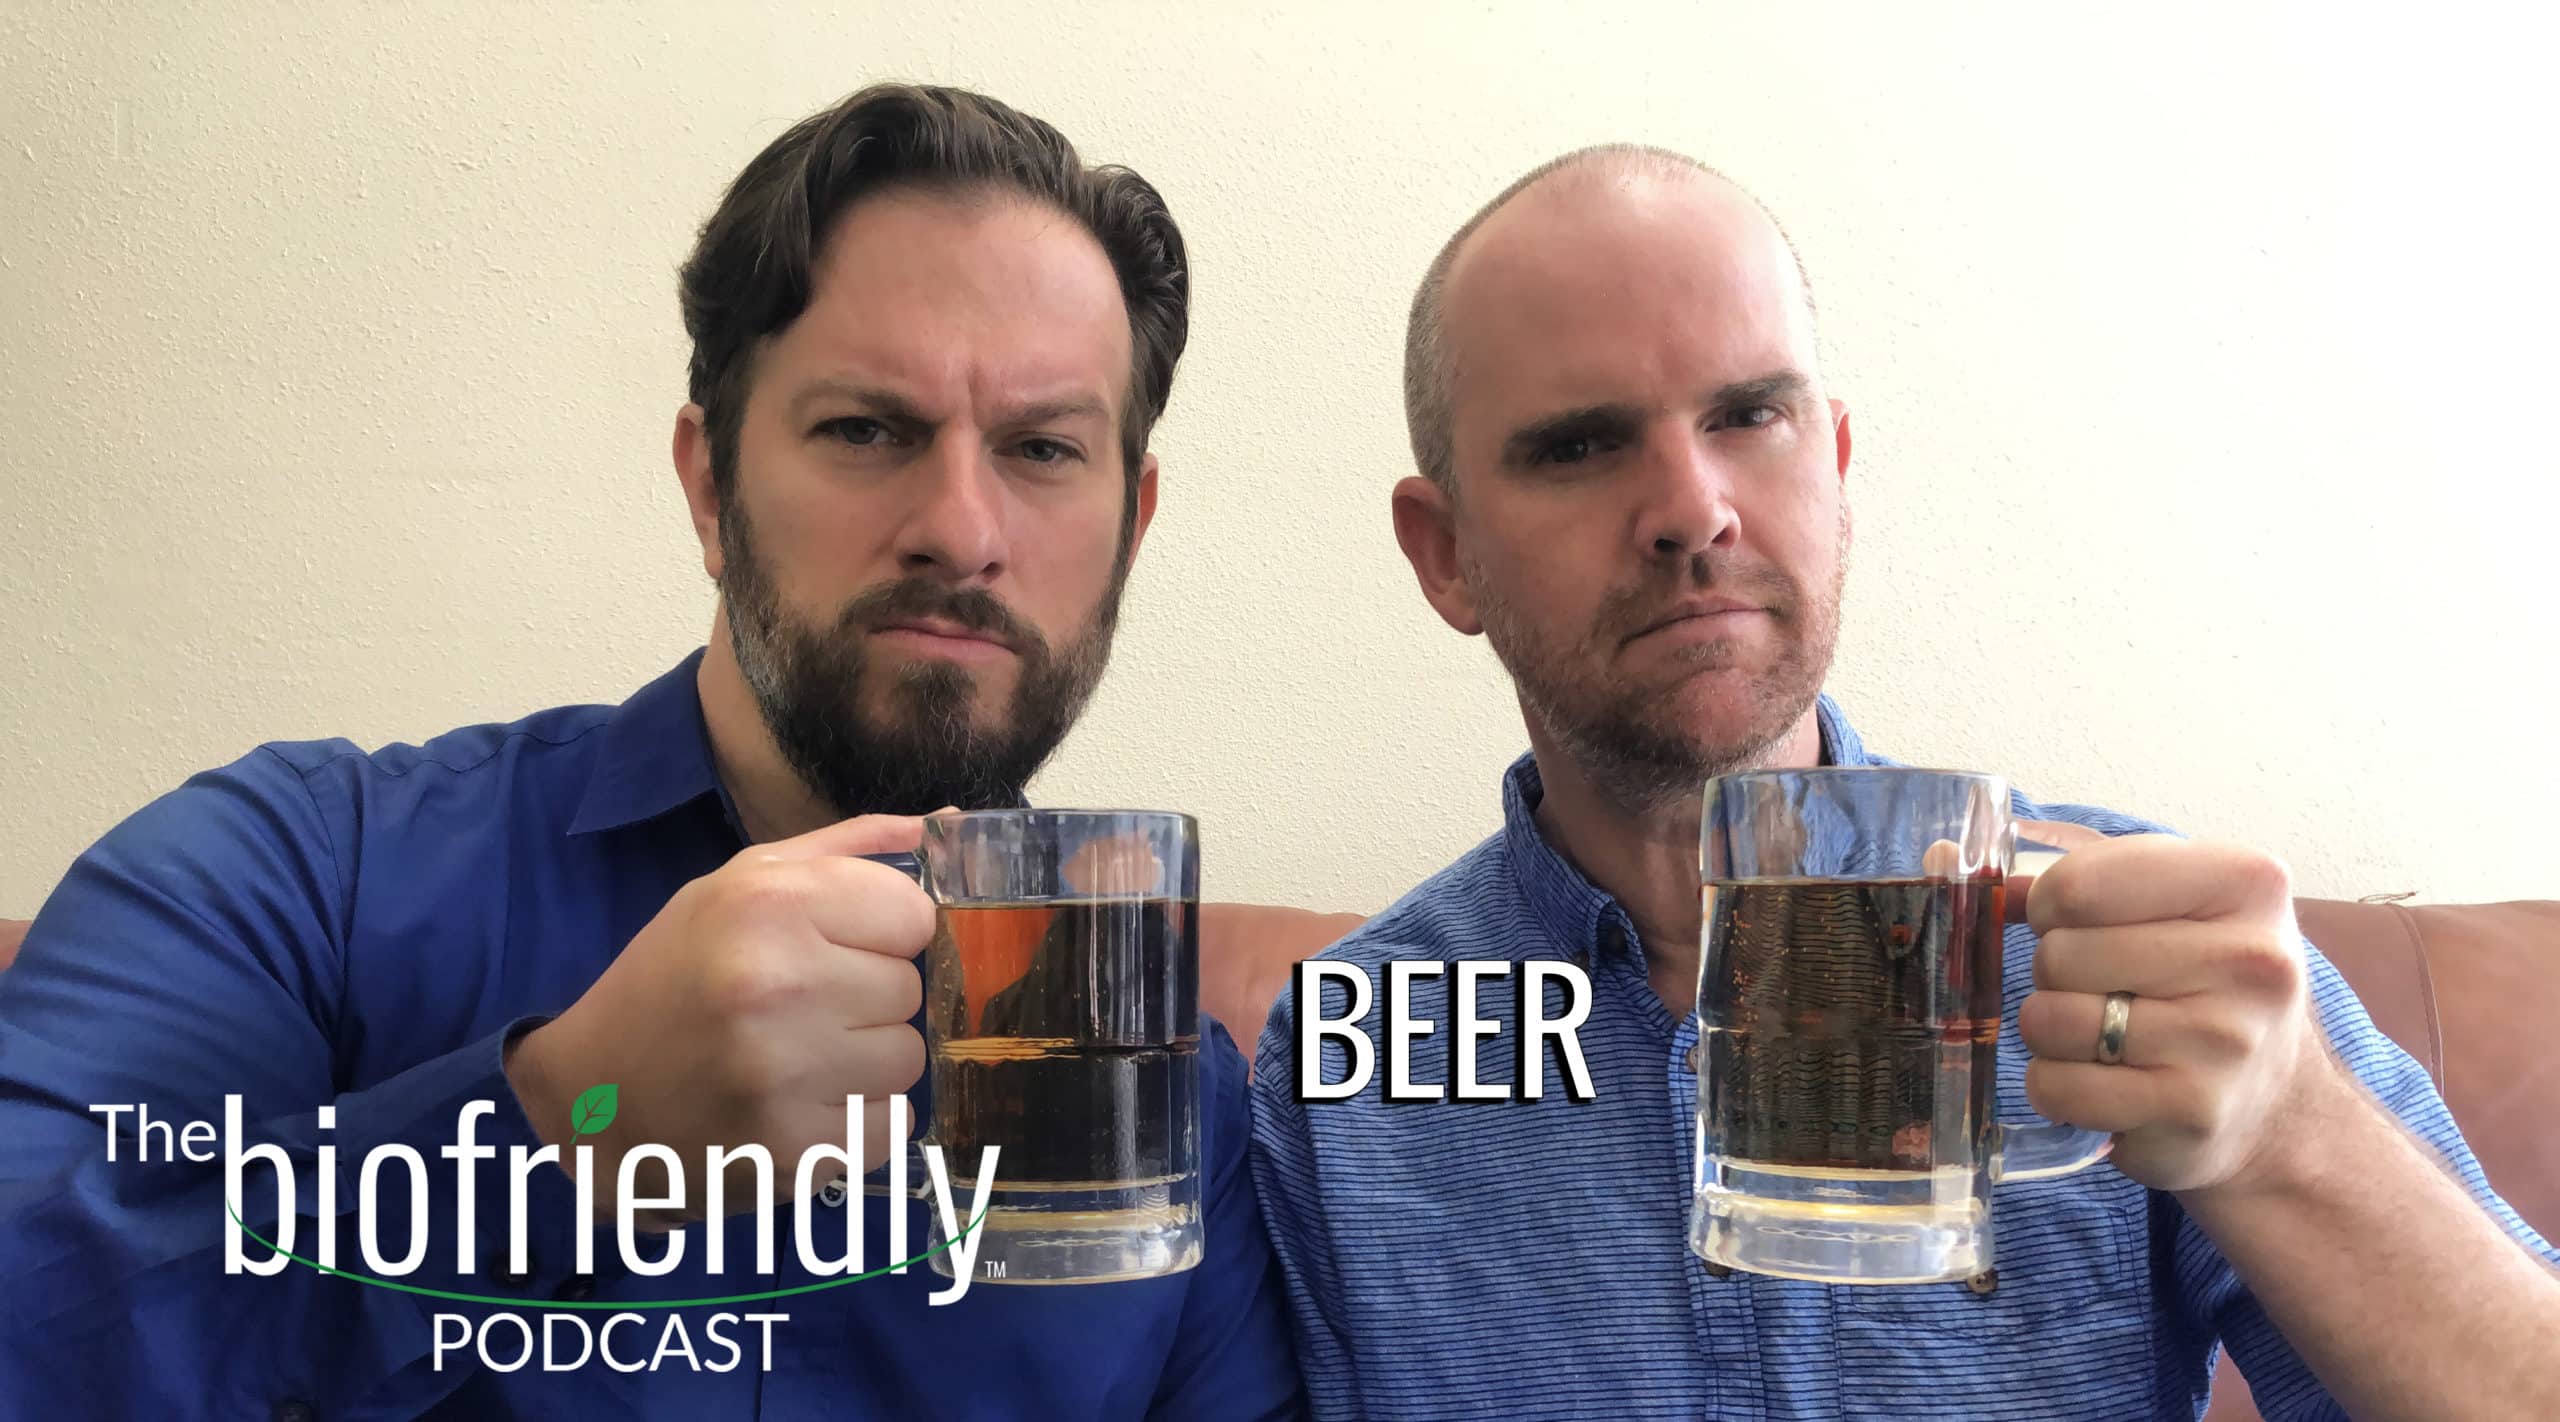 The Biofriendly Podcast - Episode 20 - Beer